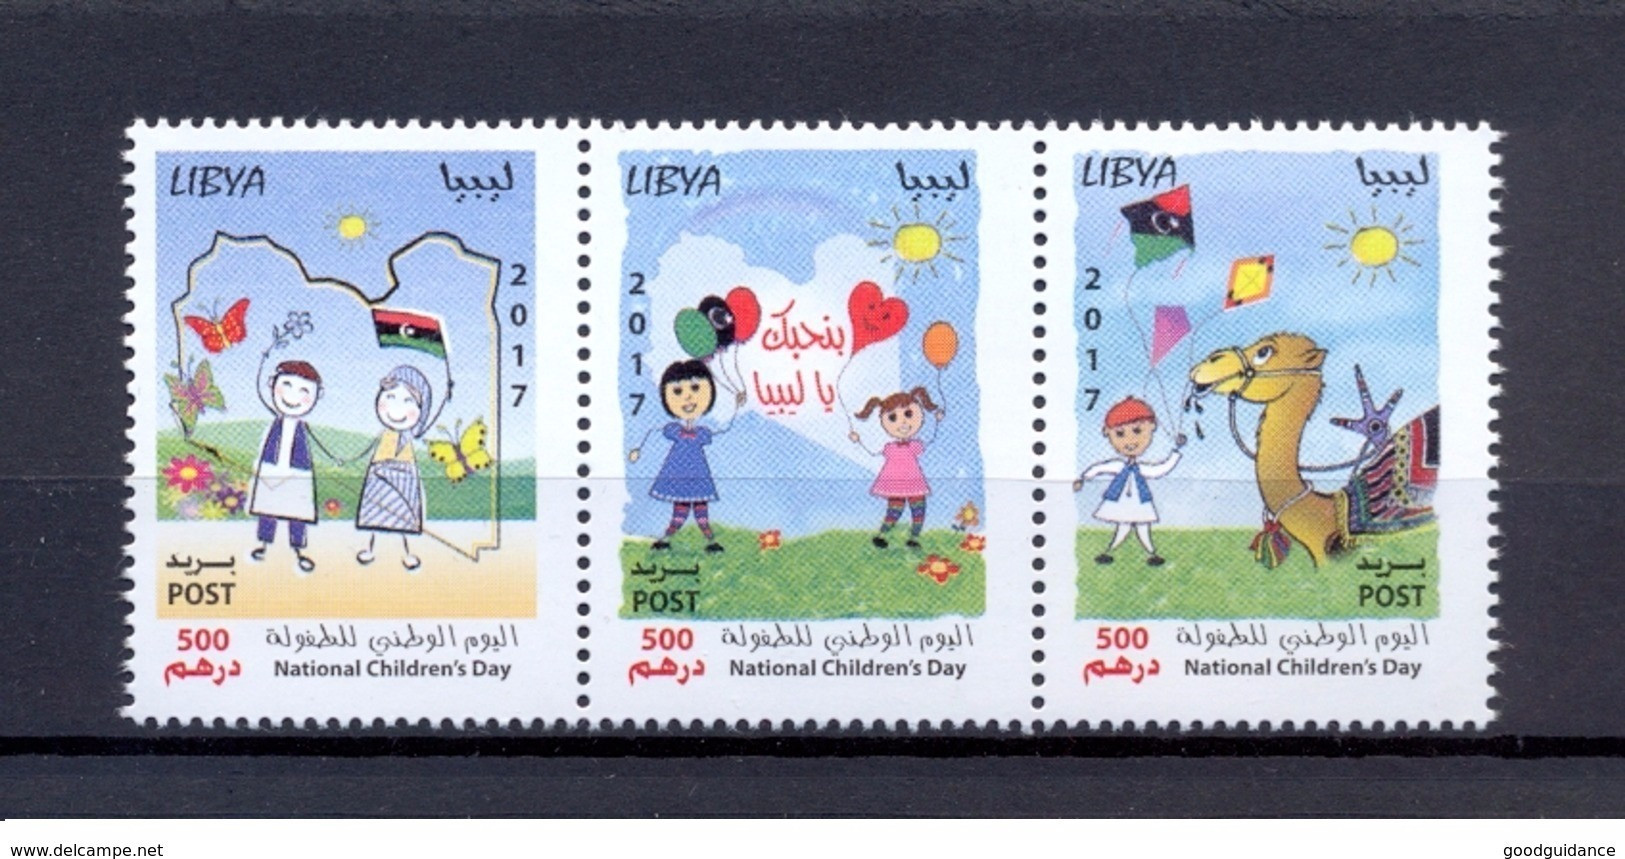 2017- Libya- Libye- National Children's Day - Butterflies, Camel, Flag, Love- Strip Of 3 Stamps- MNH** - Libyen